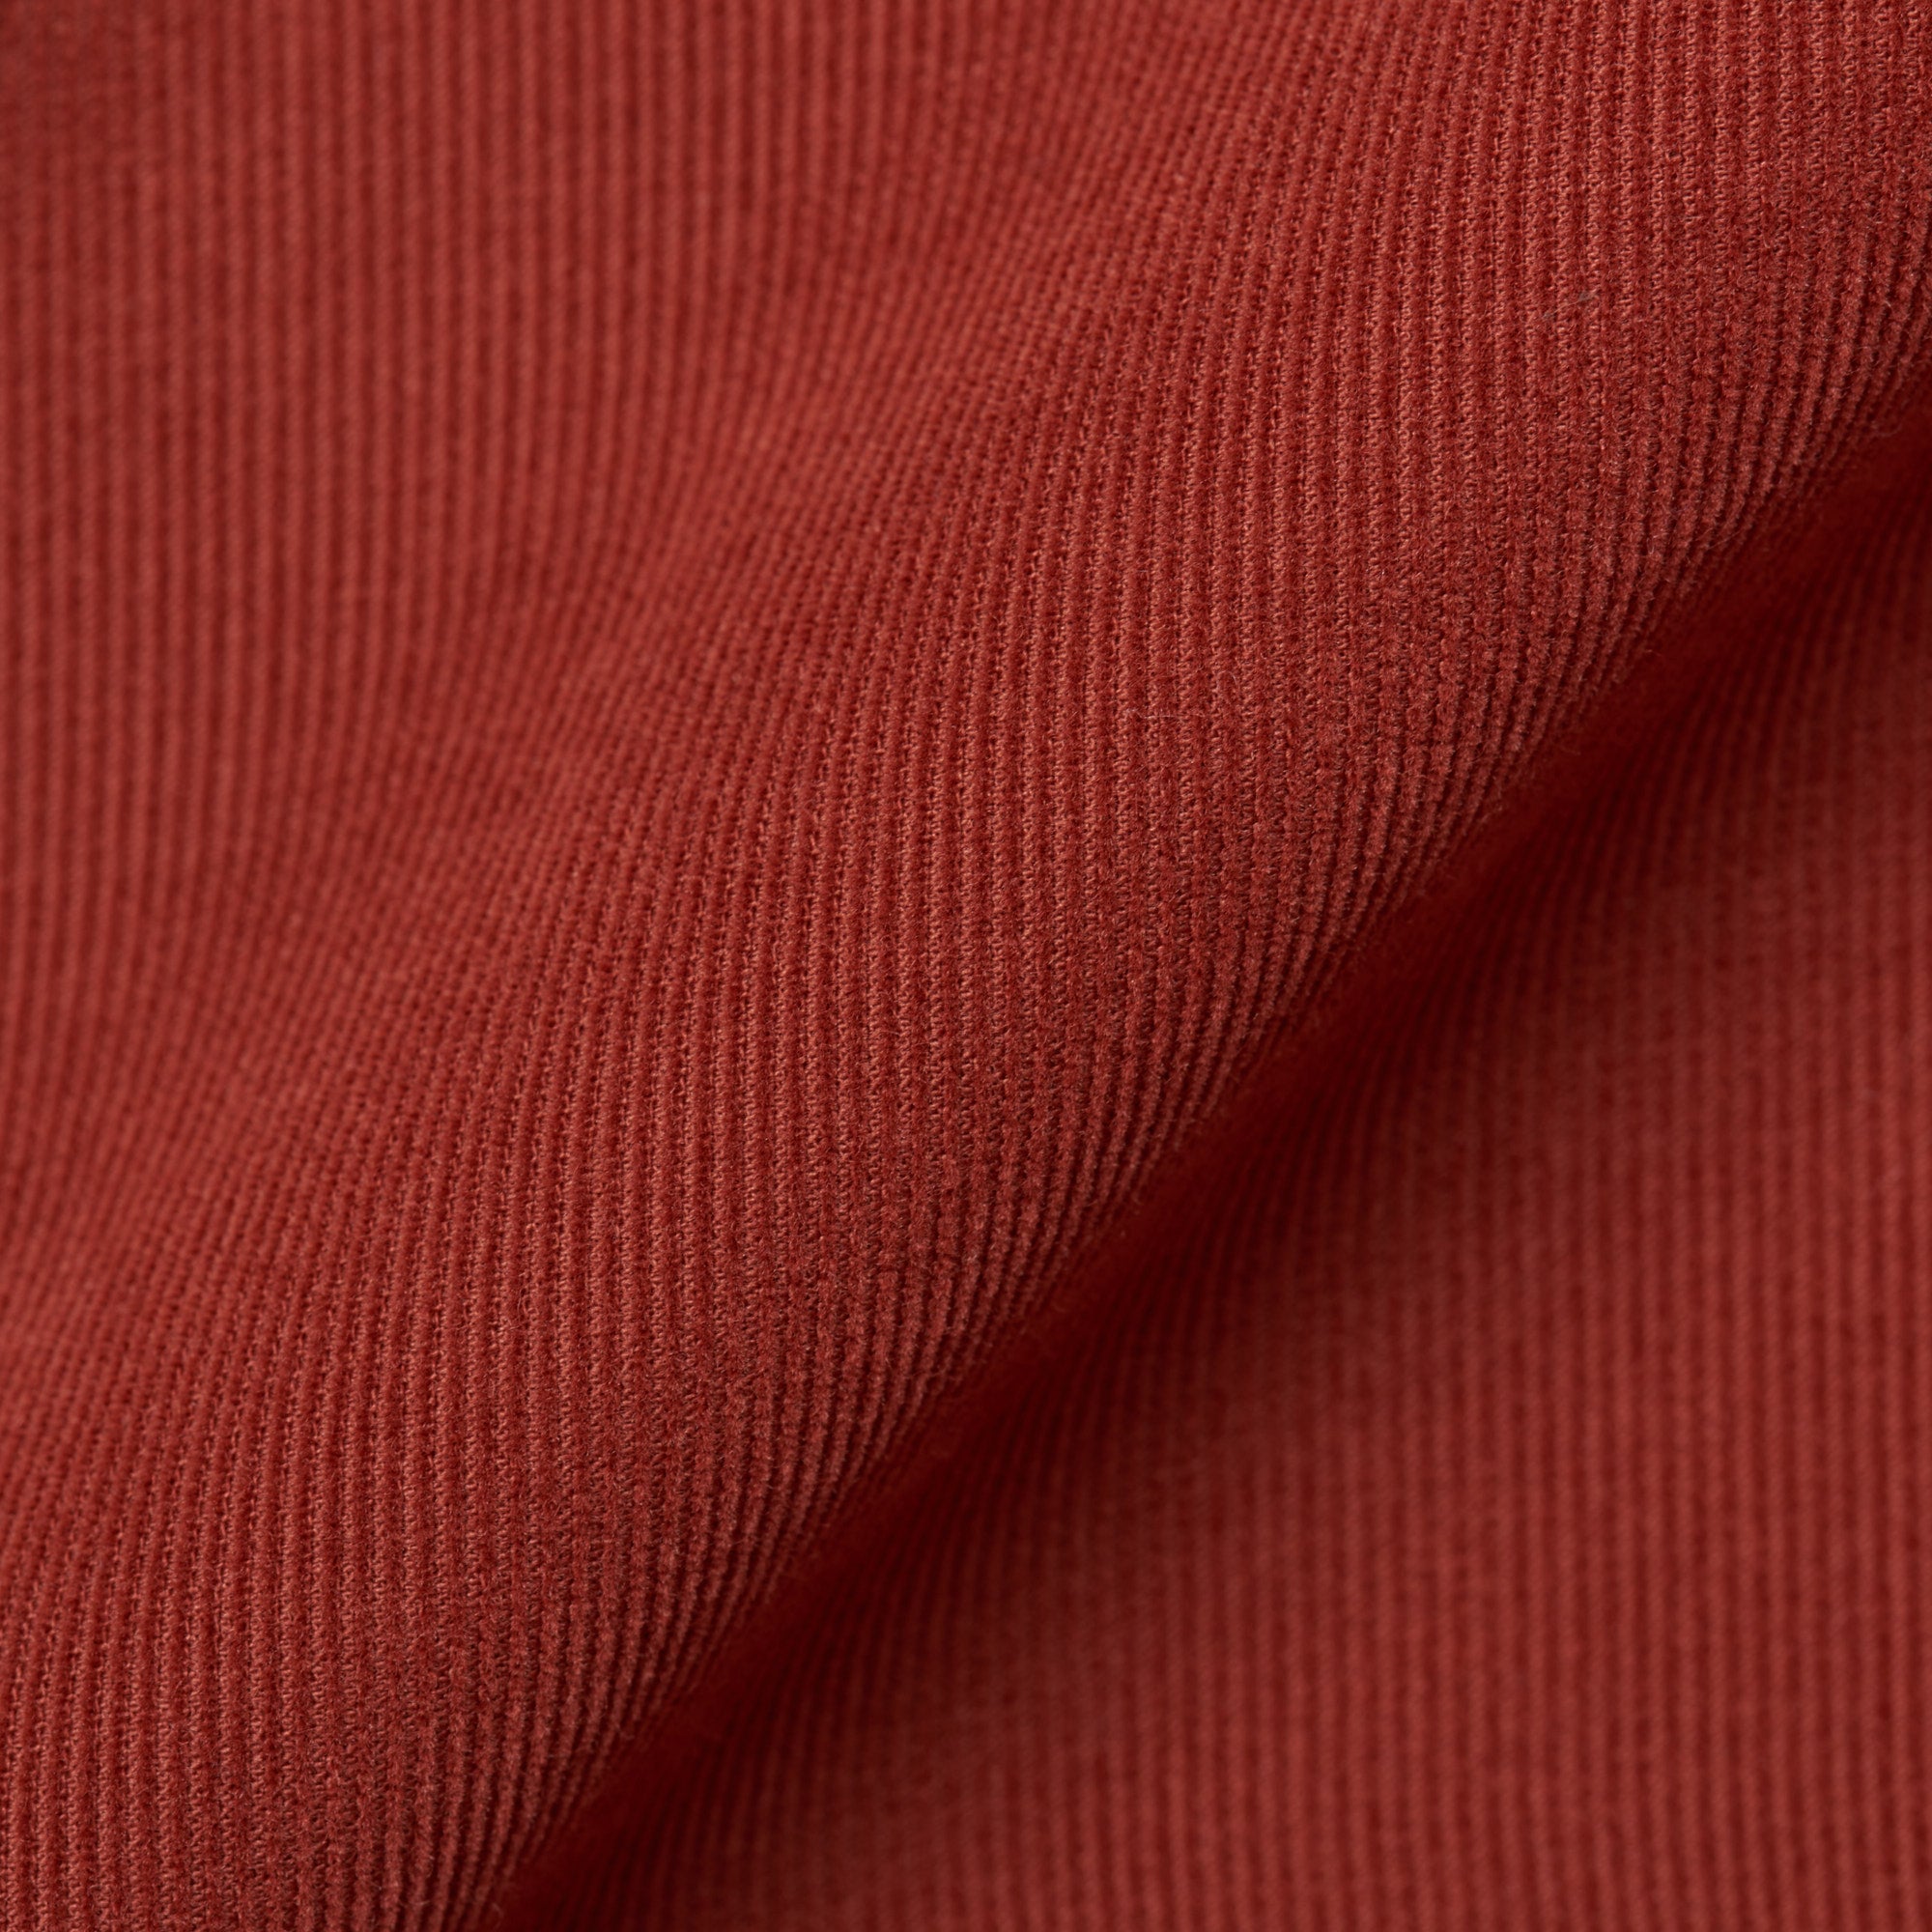 BOGLIOLI Milano "K.Jacket" Brick Red Cotton Corduroy Unlined Jacket EU 48 NEW US 38